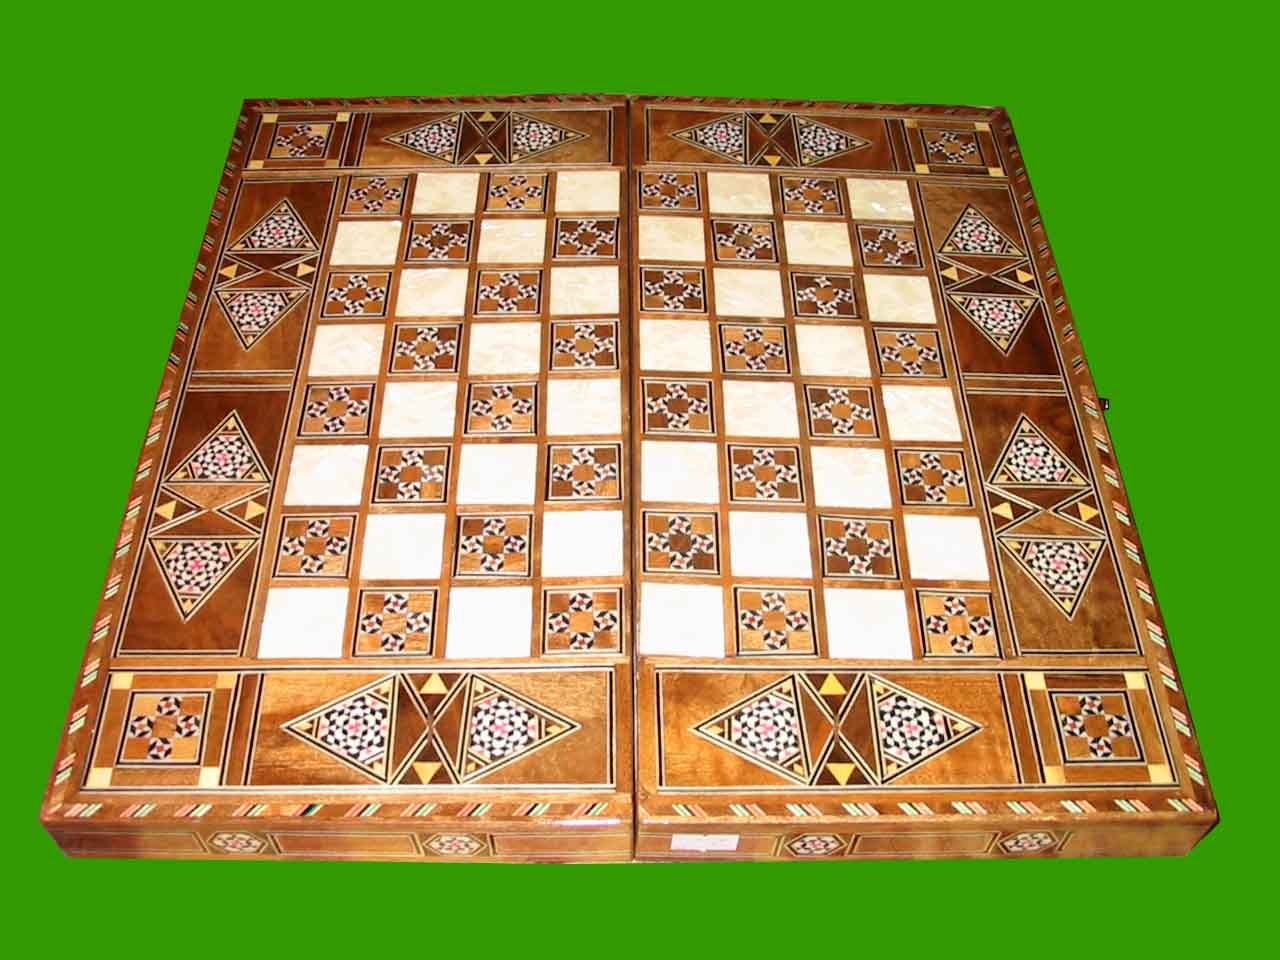 Middle Backgammon